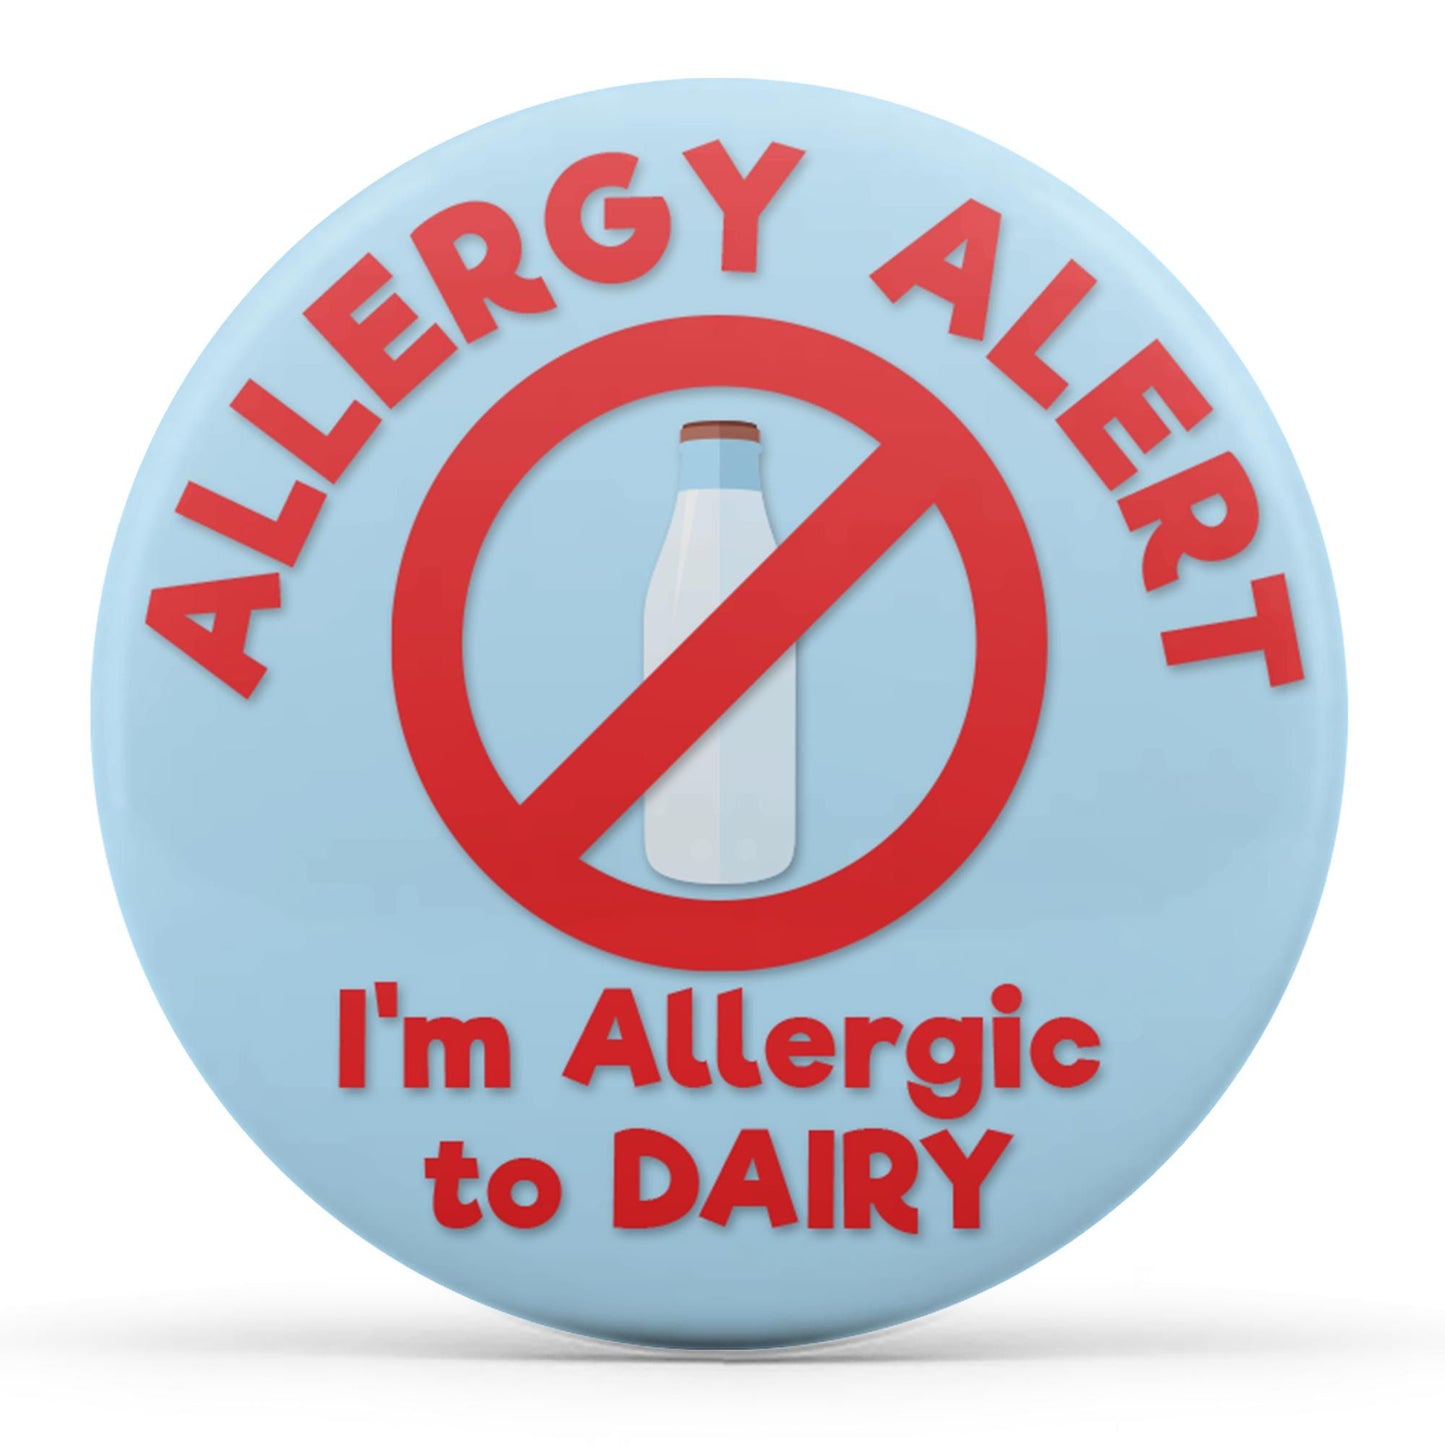 Allergy Alert - I'm Allergic to Dairy Image